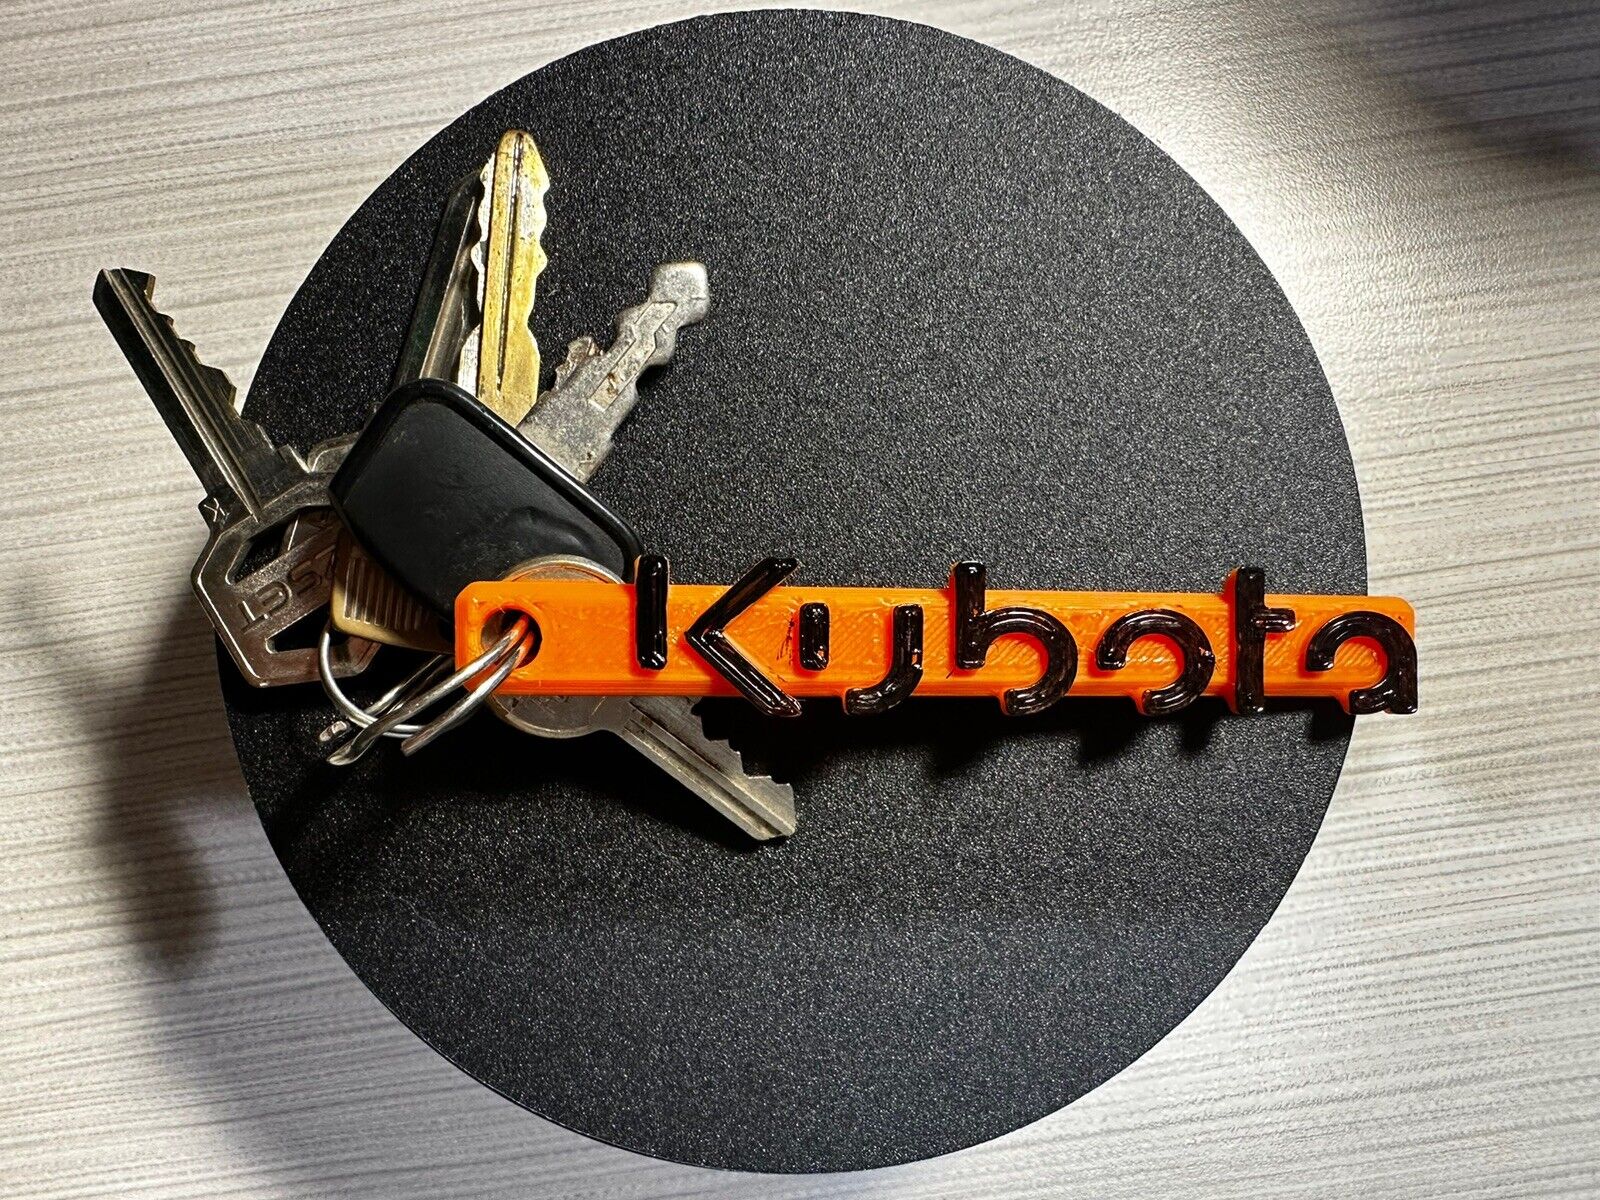 Kubota Tractor Keychain Plastic Key Tag Raised Letters Key Chain